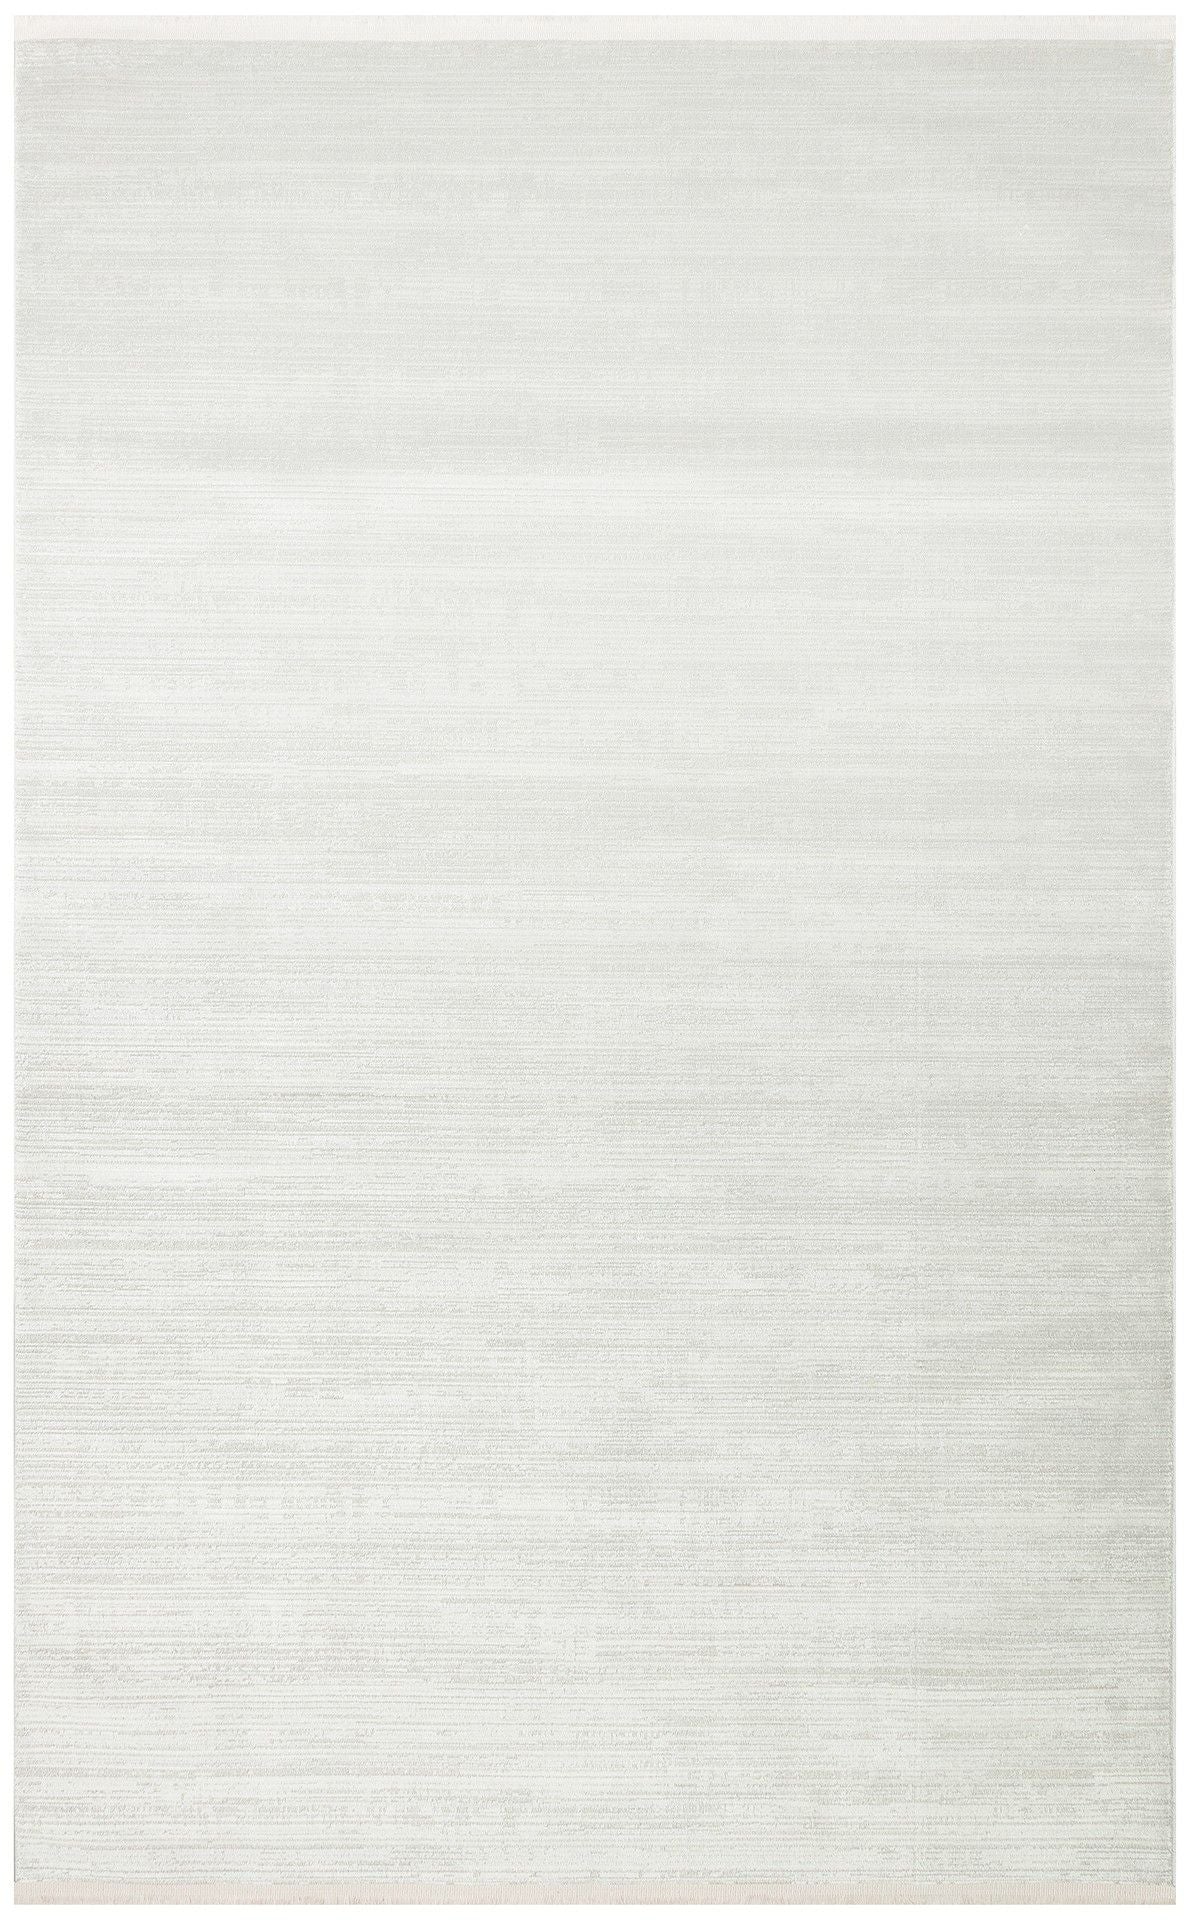 Ls Nw - Creme - Hall tæppe (100 x 200)